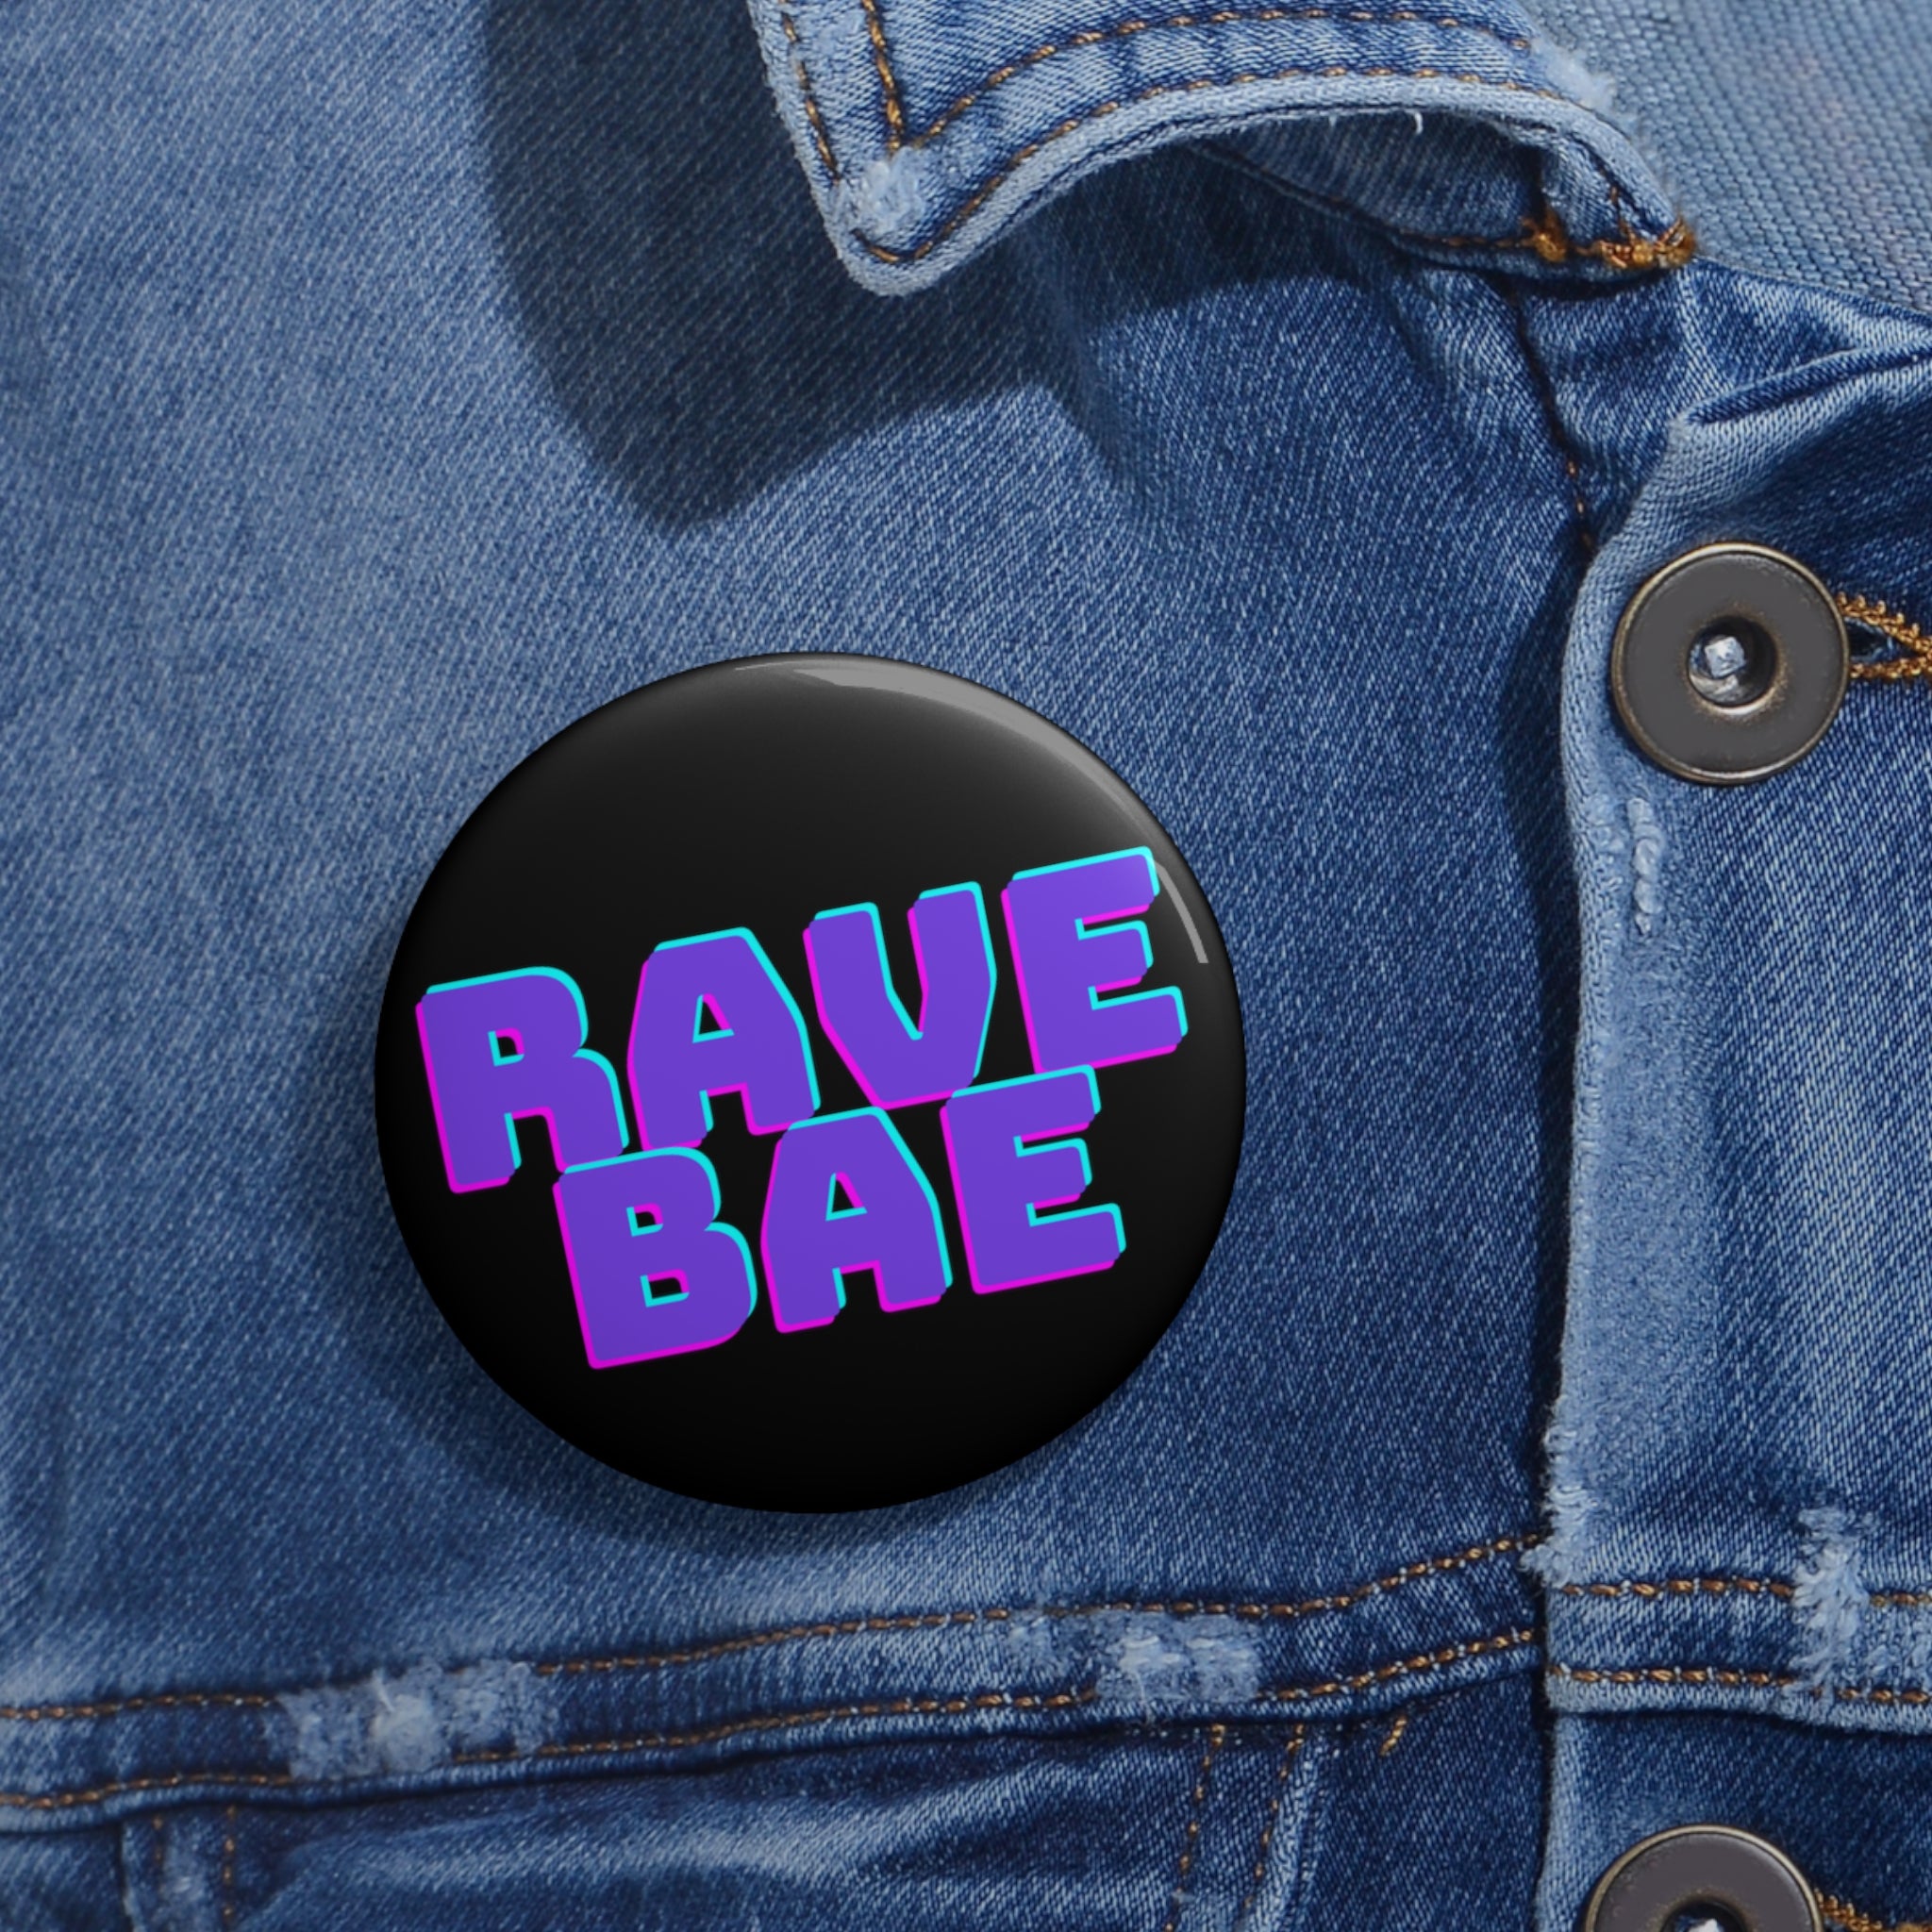 Rave Bae Pin Button